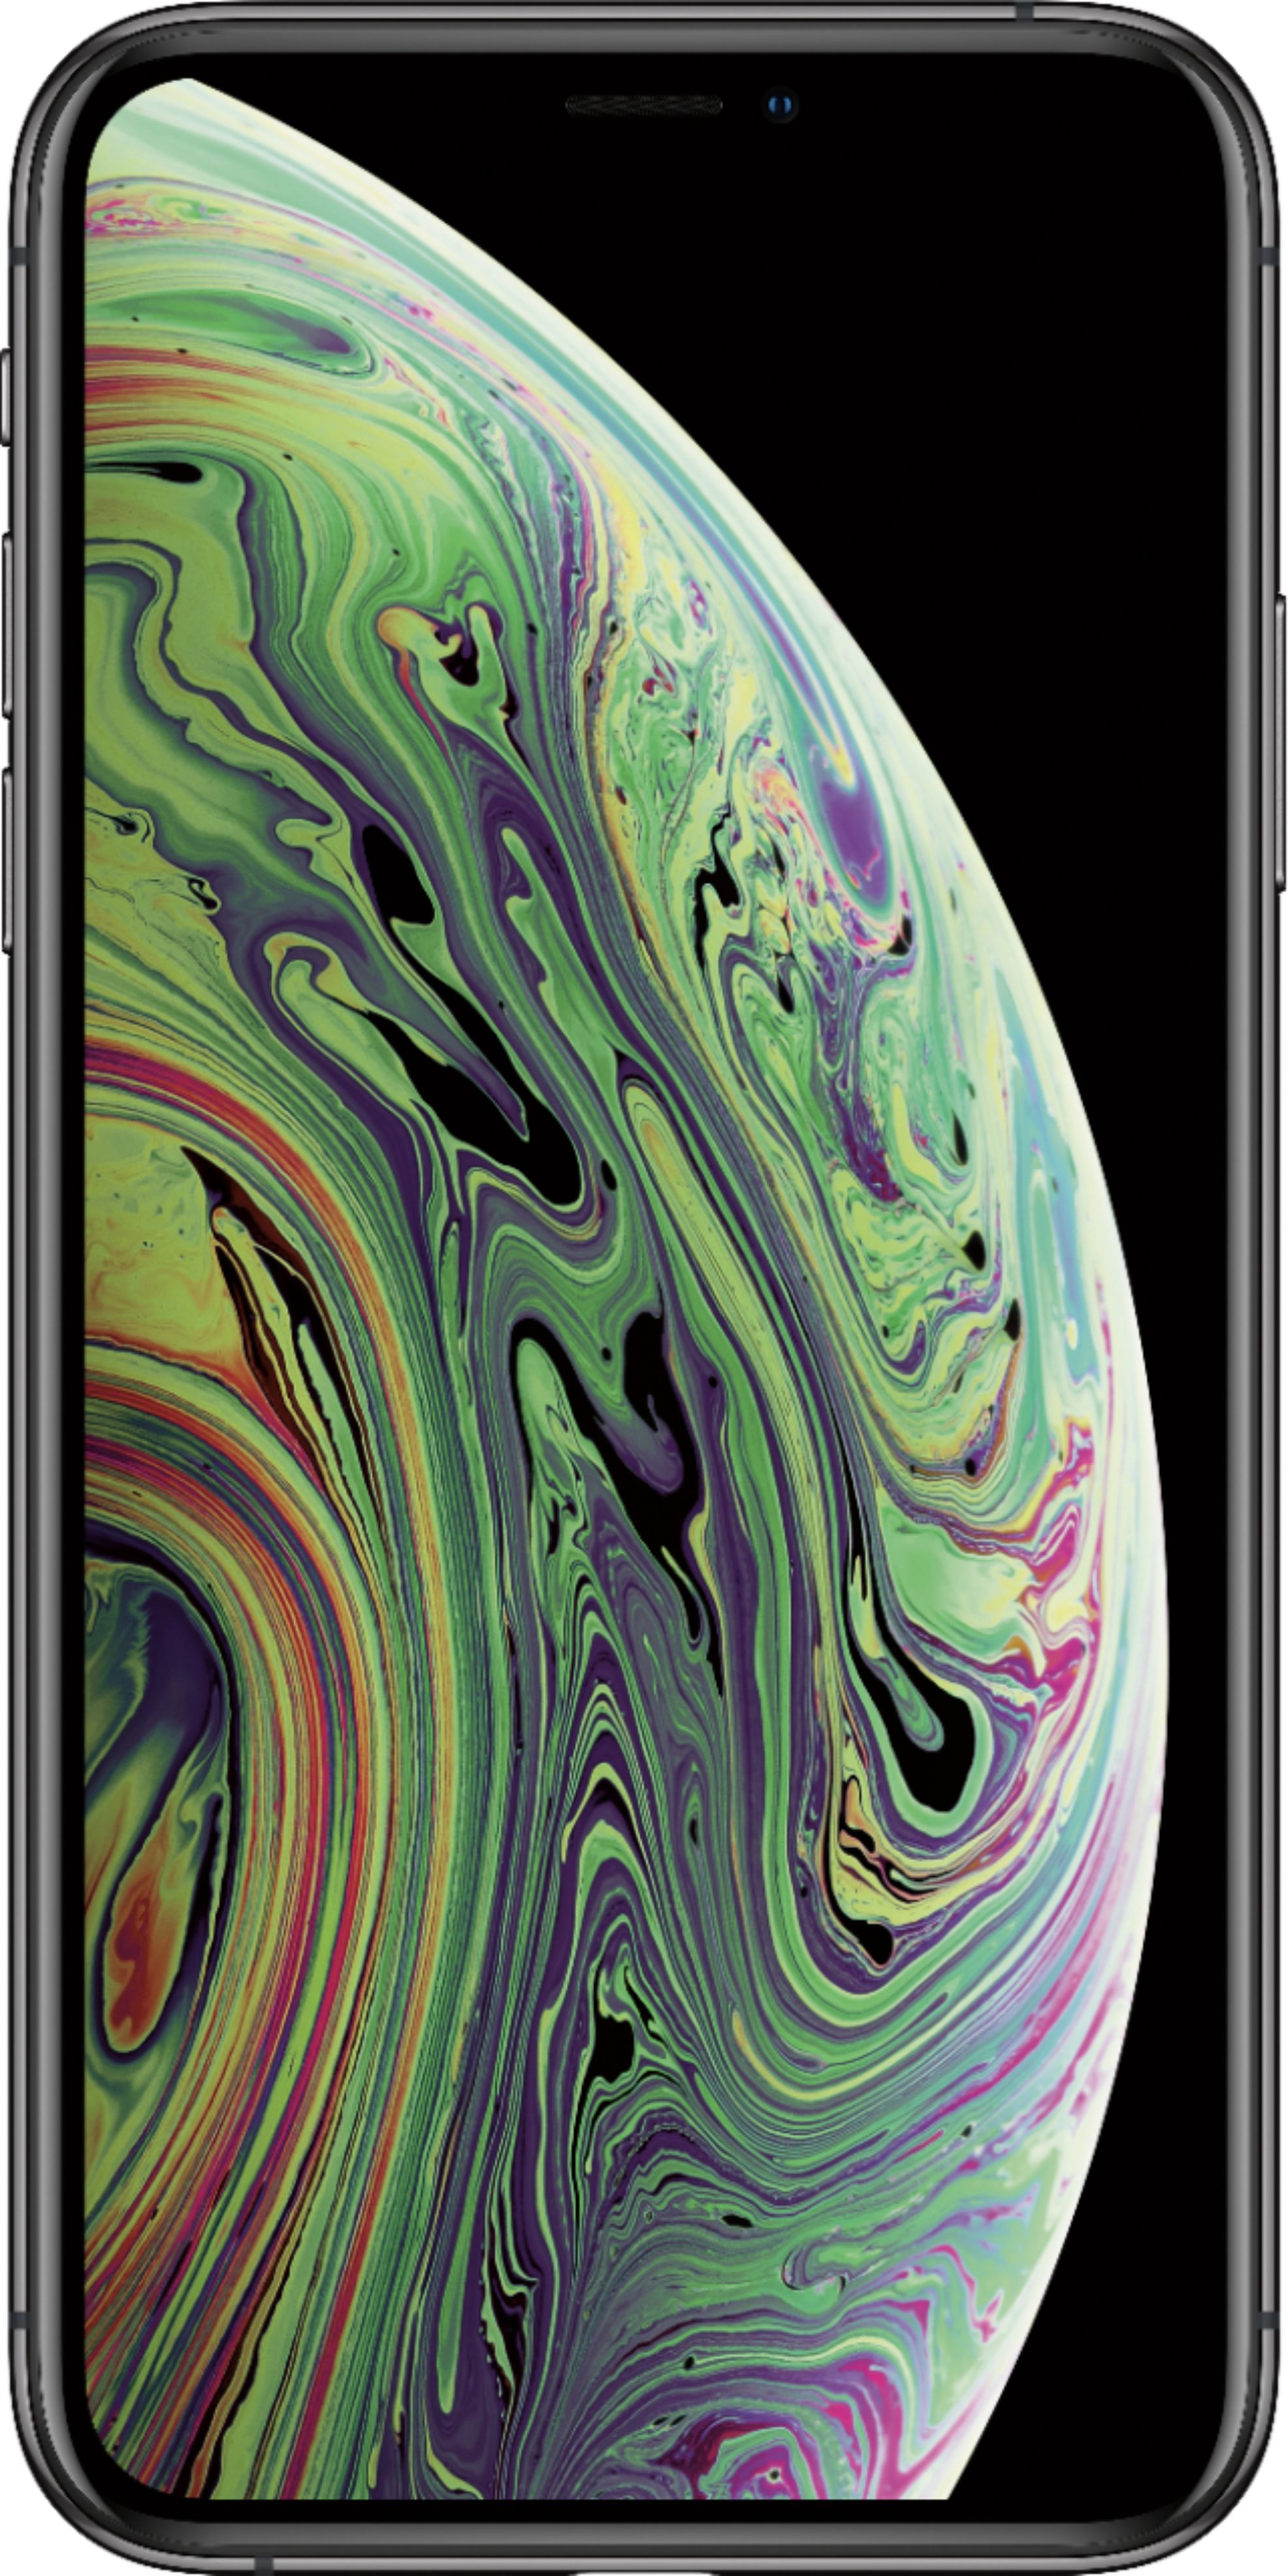 Apple iPhone XS 256GB Space Gray (Unlocked) MT972LL/A - Best Buy